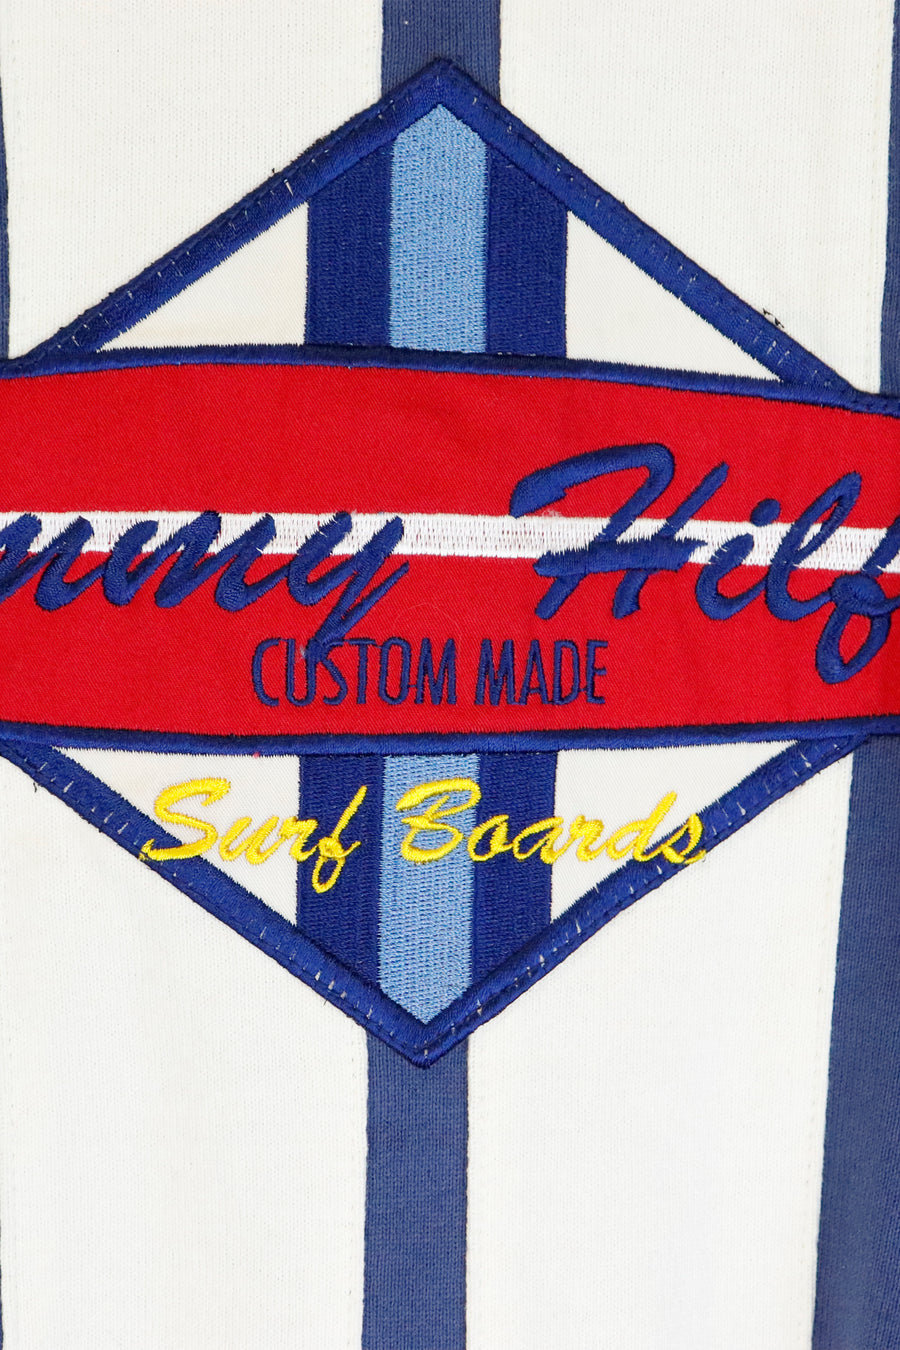 Vintage Tommy Hilfiger Surfwear 'Custom Made Surfboards' T Shirt Sz L